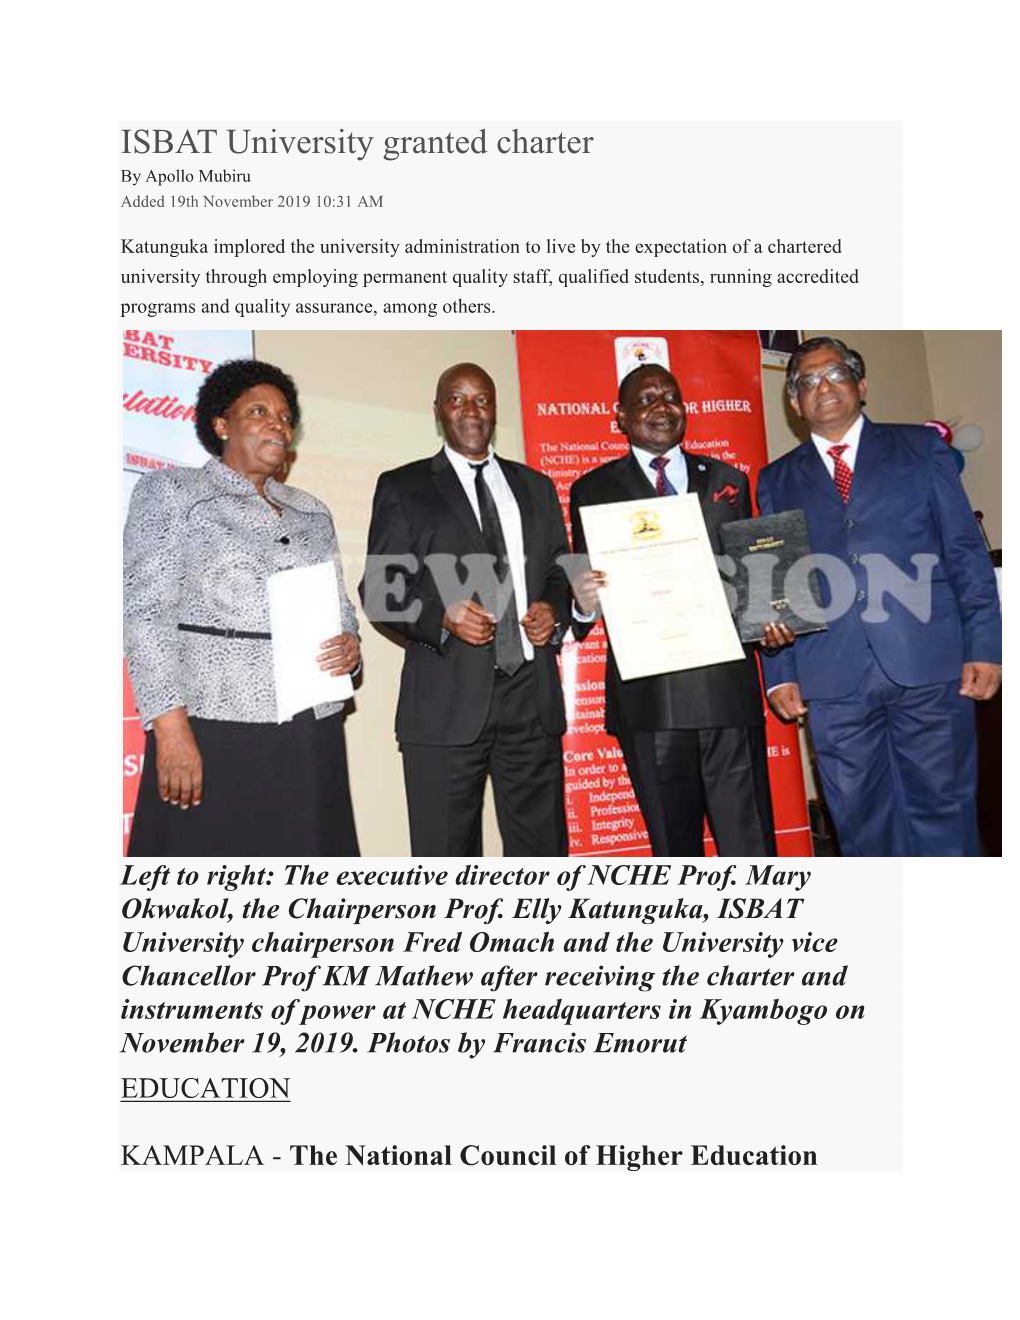 ISBAT University Granted Charter by Apollo Mubiru Added 19Th November 2019 10:31 AM